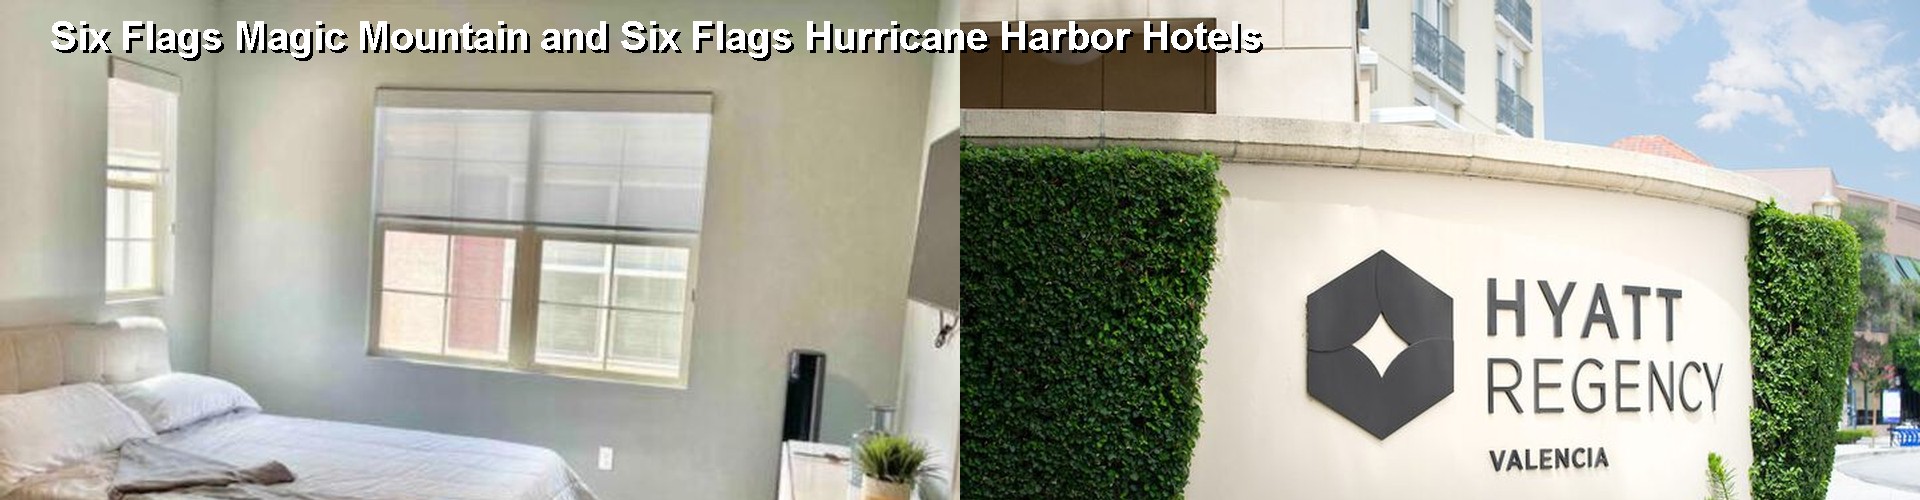 3 Best Hotels near Six Flags Magic Mountain and Six Flags Hurricane Harbor